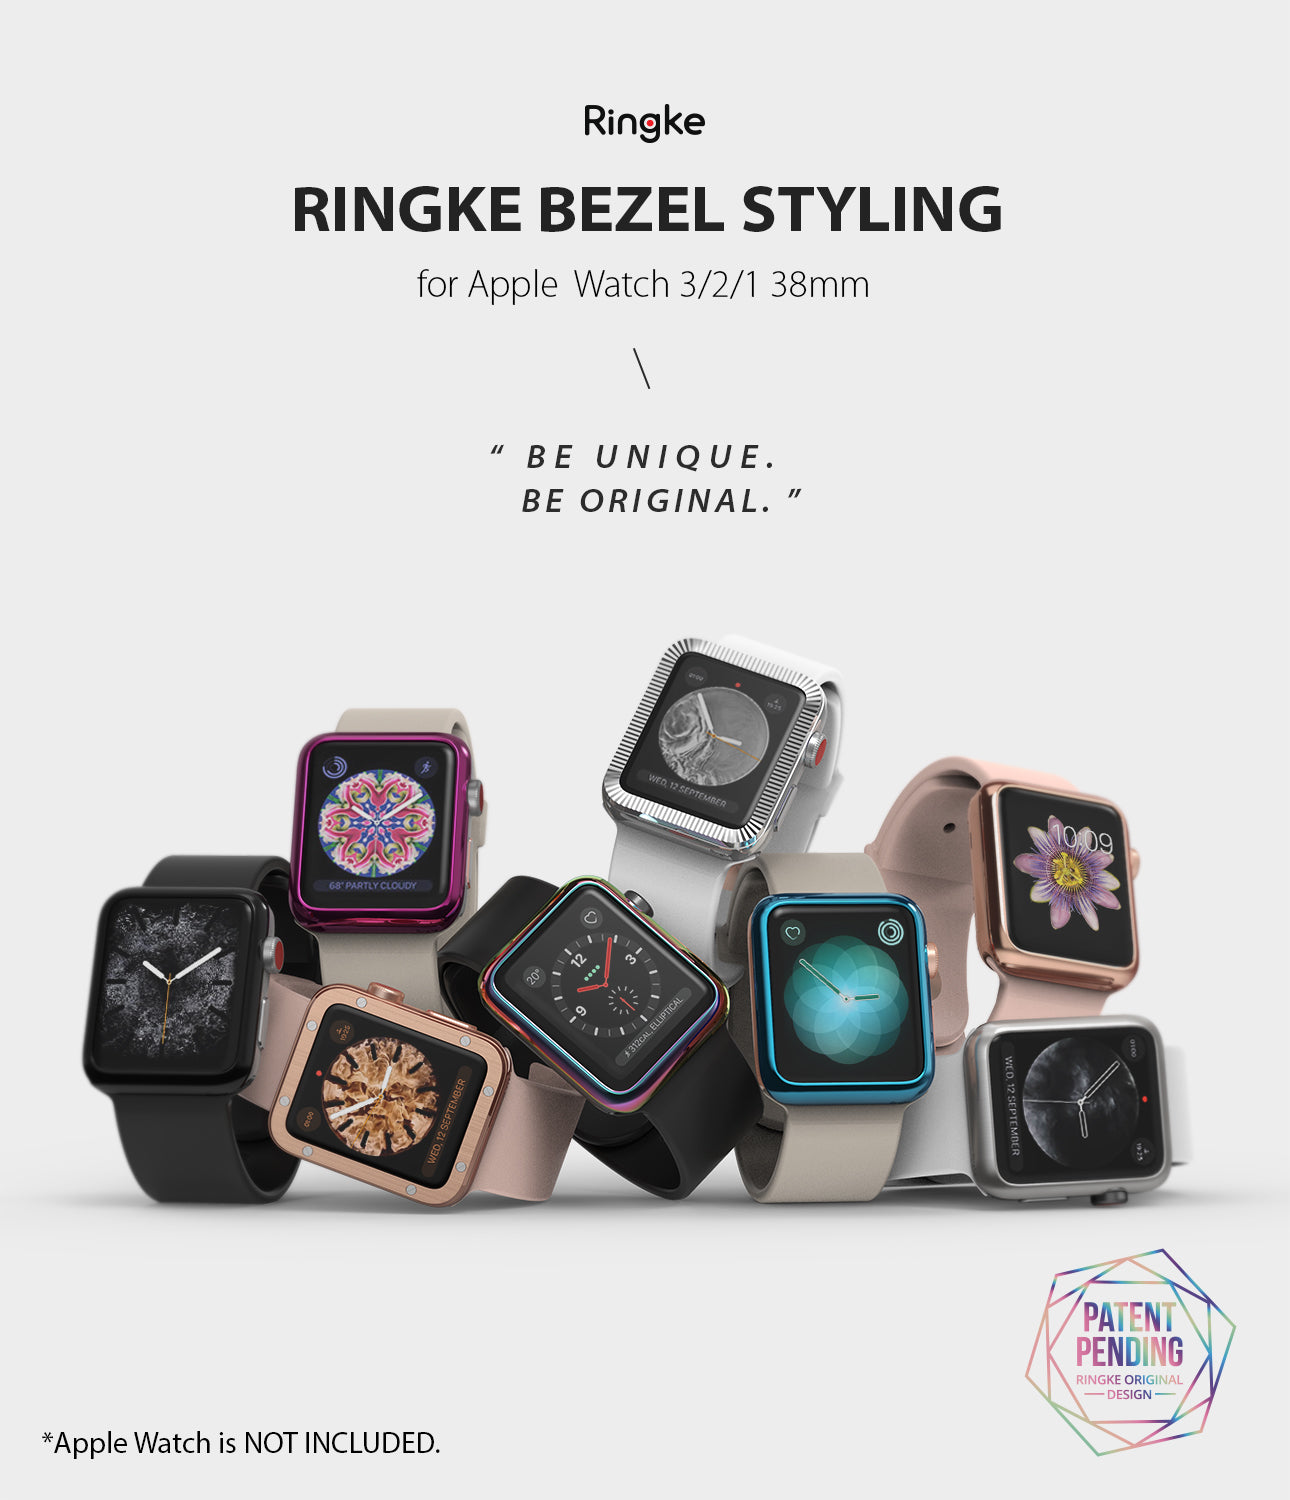 apple watch 3 2 1 38mm case ringke bezel styling stainless steel frame cover 38-09